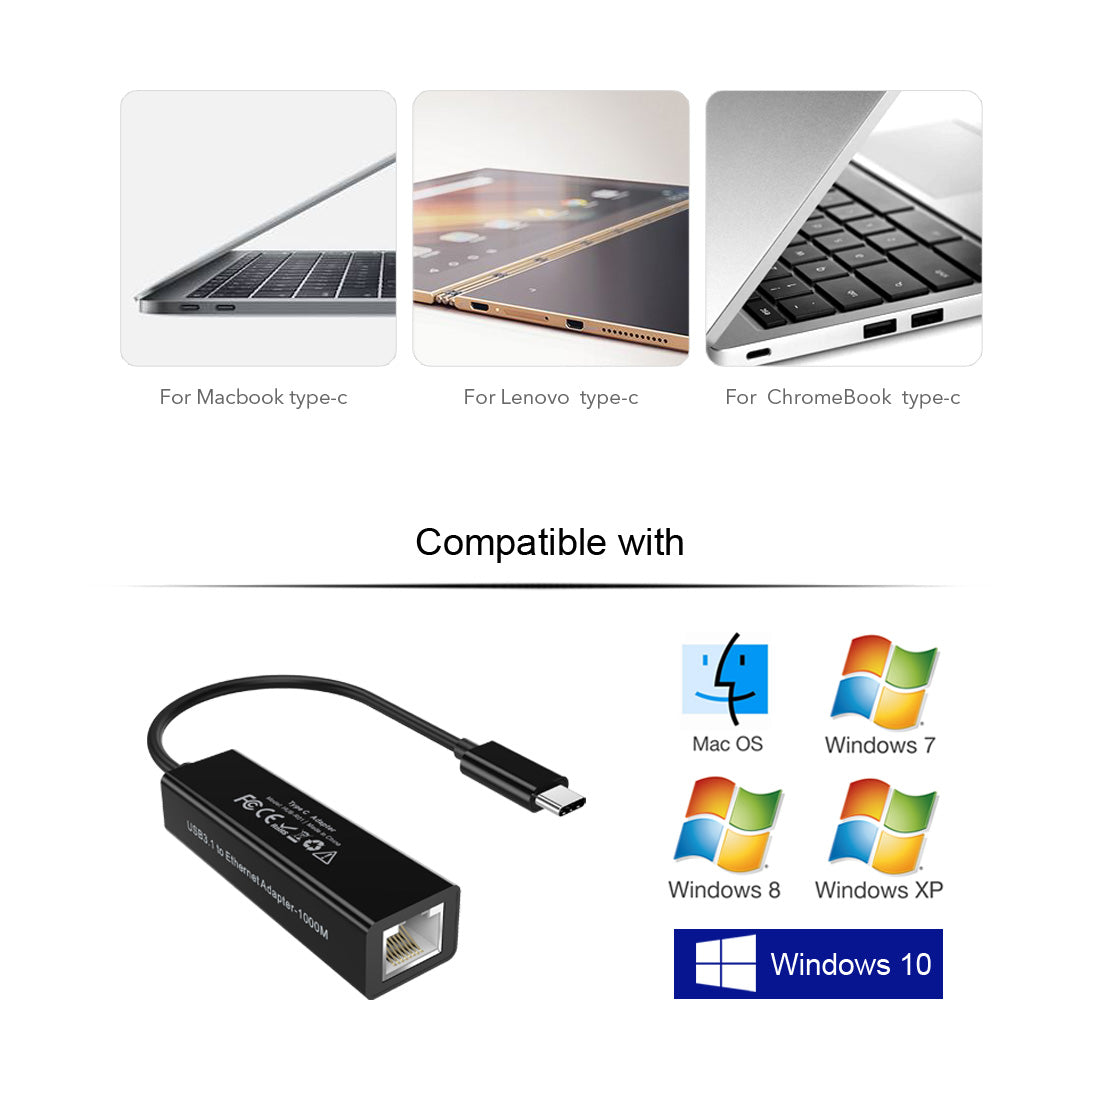 HUB-R01 Adaptador USB C a Ethernet, CHOETECH USB 3.1 Tipo C a RJ-45 10/100/1000 Gigabit Ethernet Adaptador de red LAN para 2017 iMac, 2017/2016 MacBook Pro, 2015 MacBook, ChromeBook Pixel, etc.